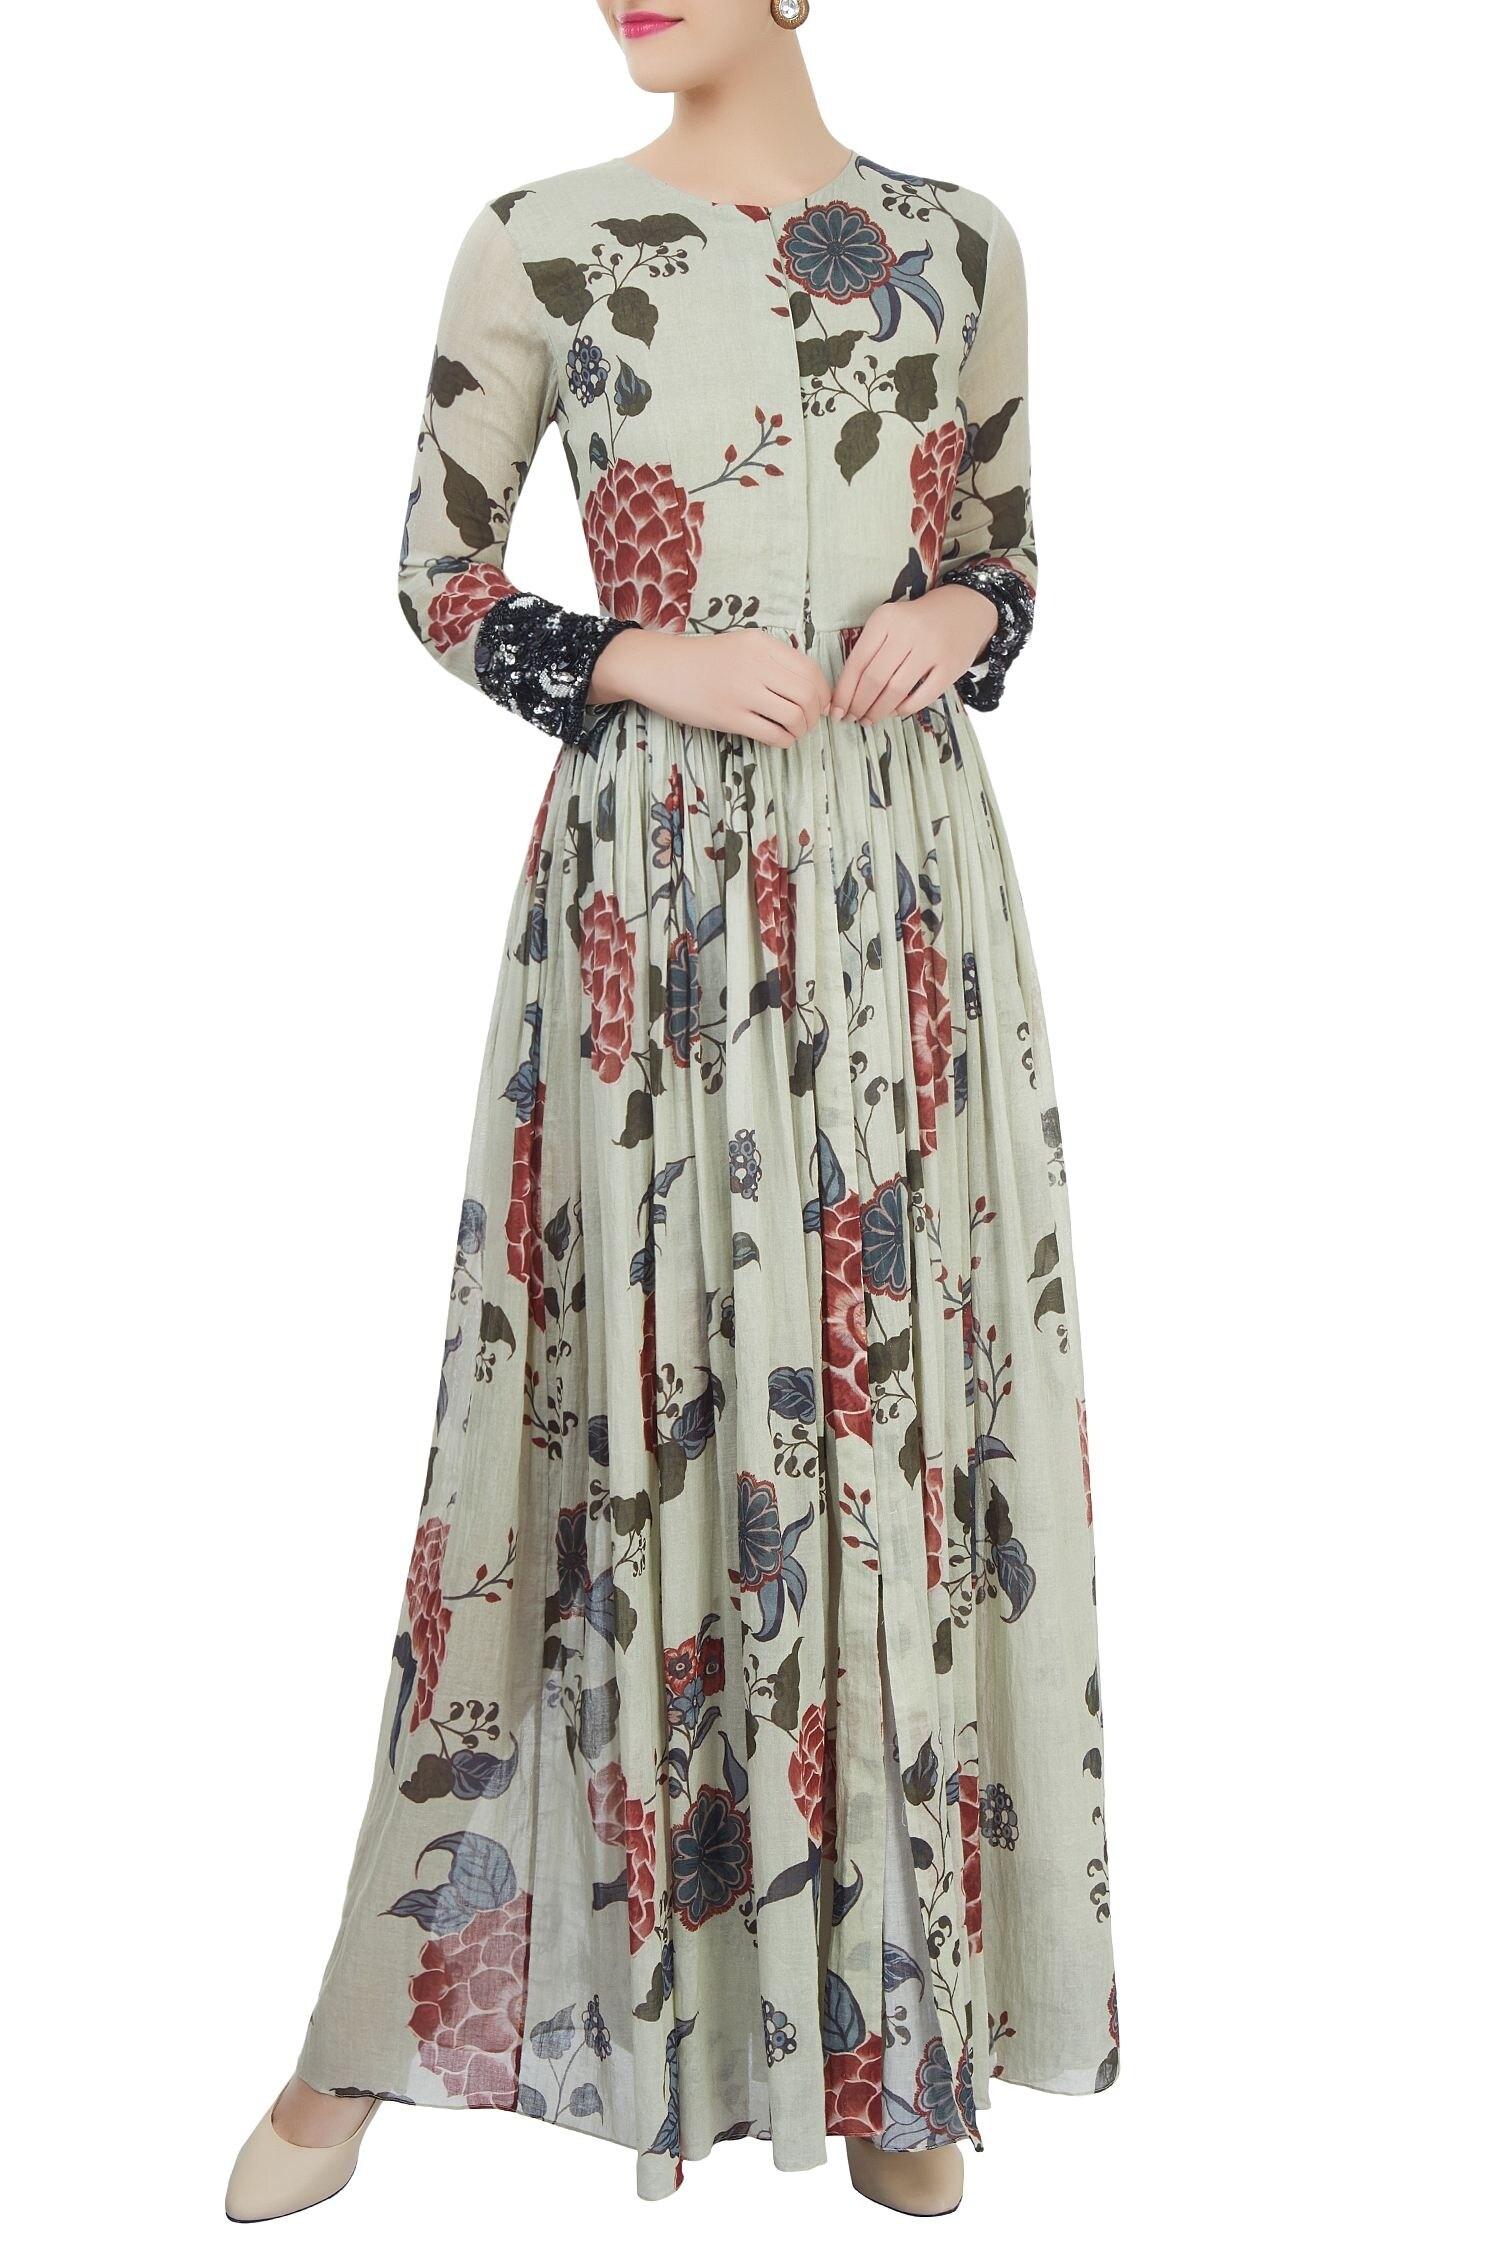 Buy Greyish blue floral print dress by Saaksha & Kinni at Aza Fashions